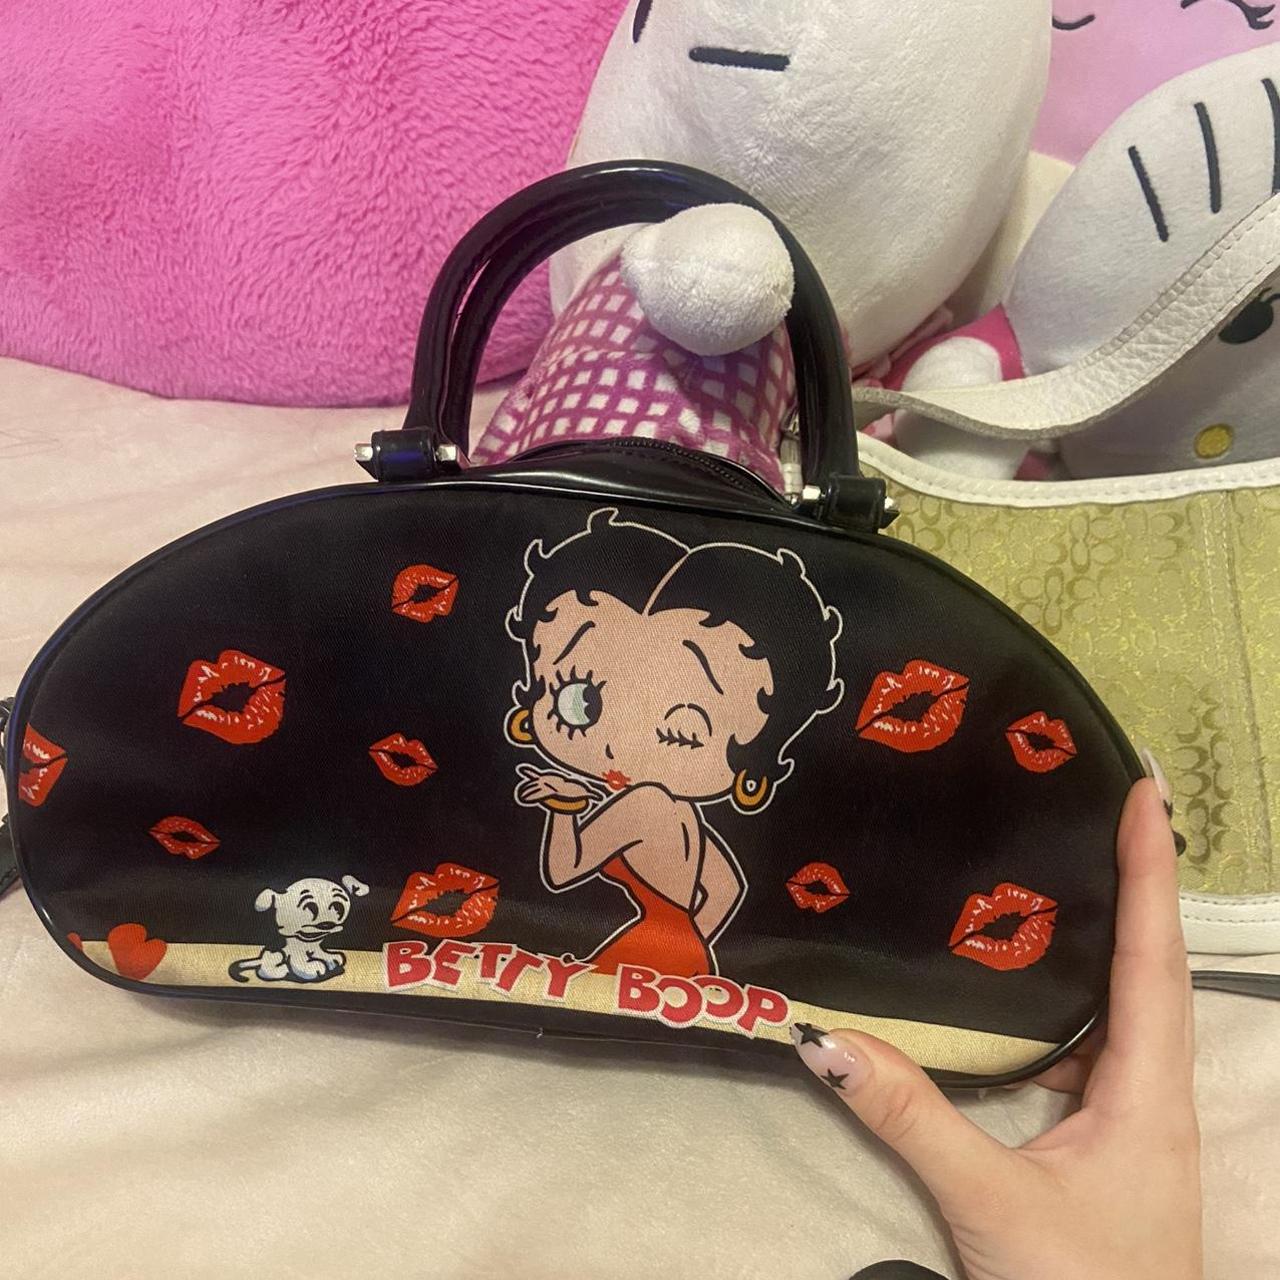 Betty Boop purse | Betty boop purses, Big purses, Betty boop